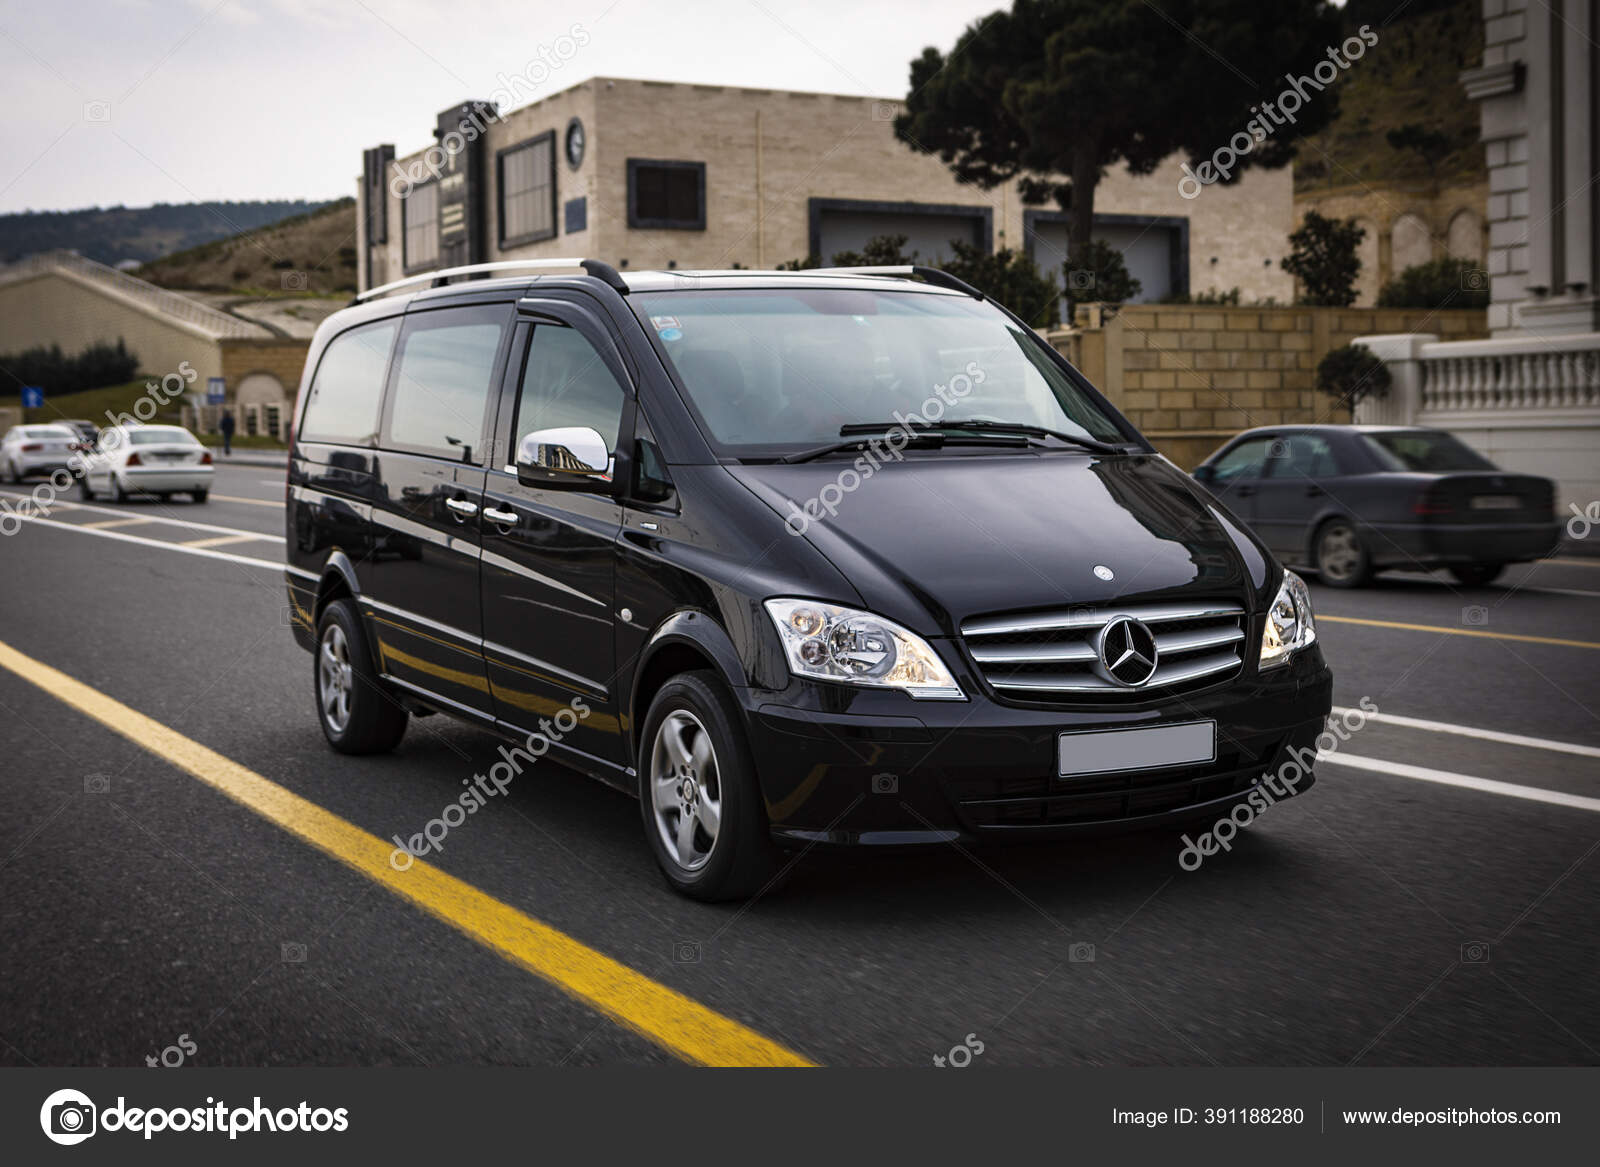 Used MercedesBenz Vito Vans For Sale  AutoTrader Vans